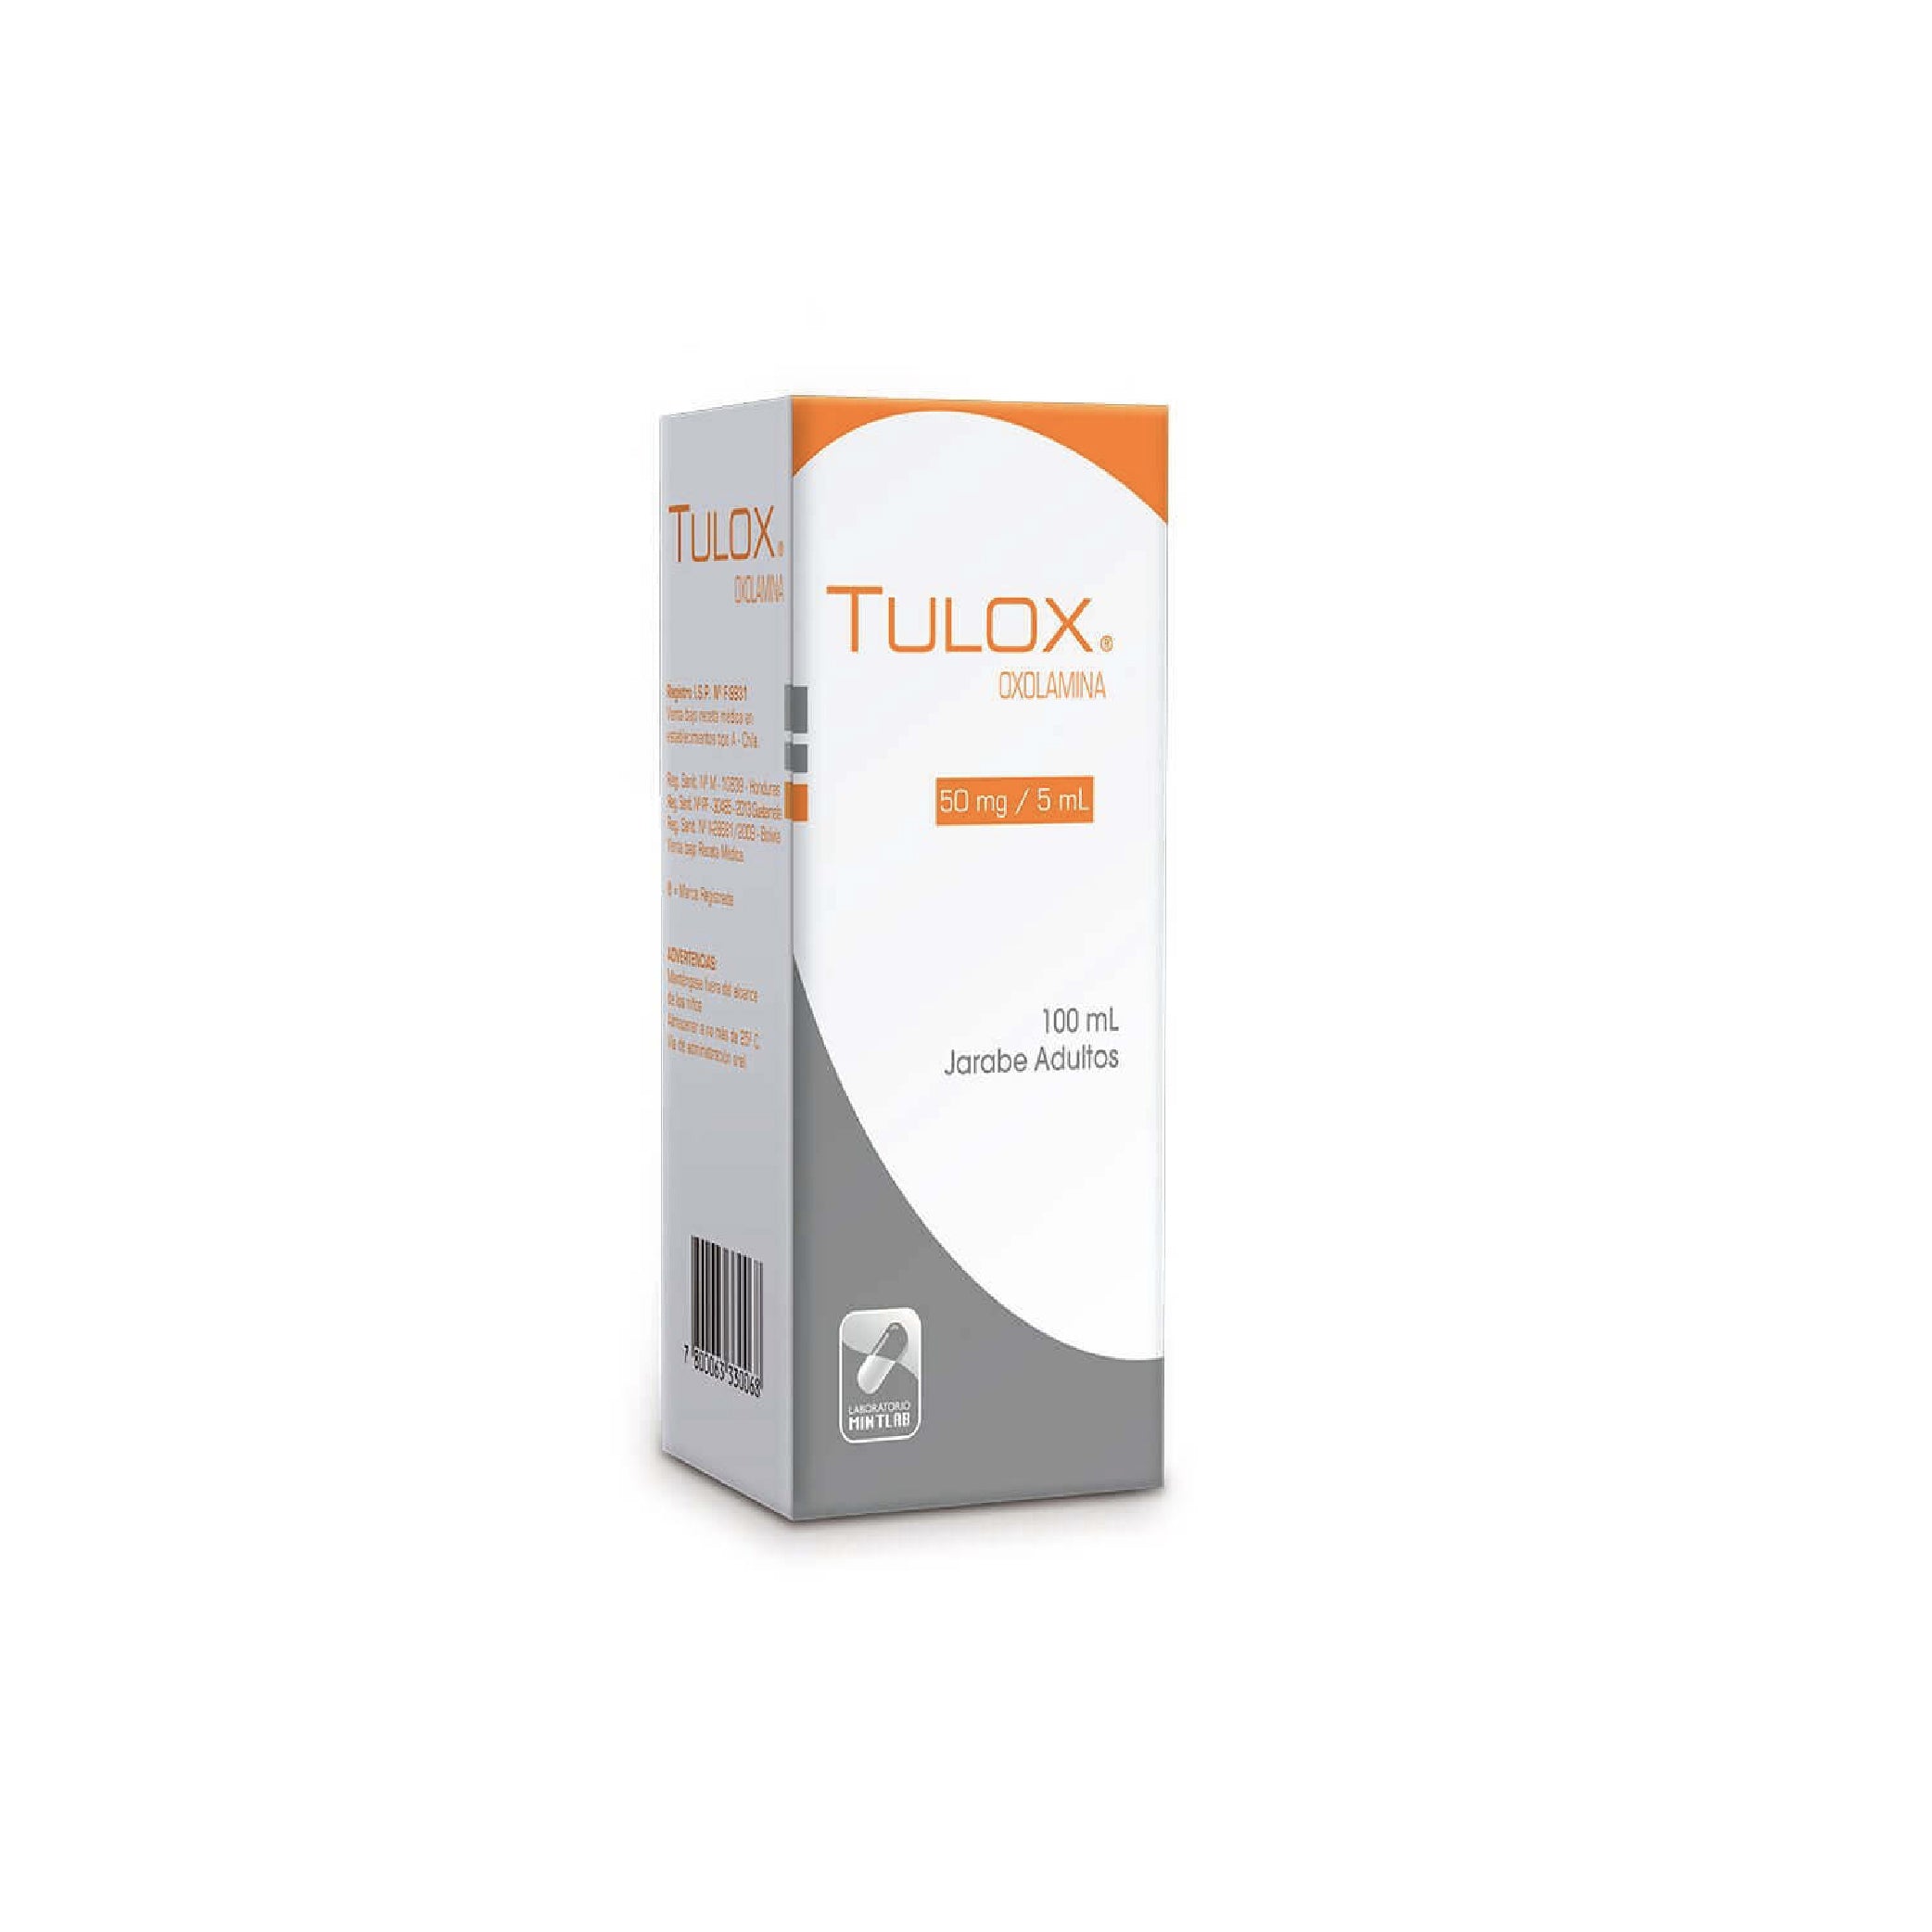 TULOX Ad. 50mg /5ml Jbe. x 100ml